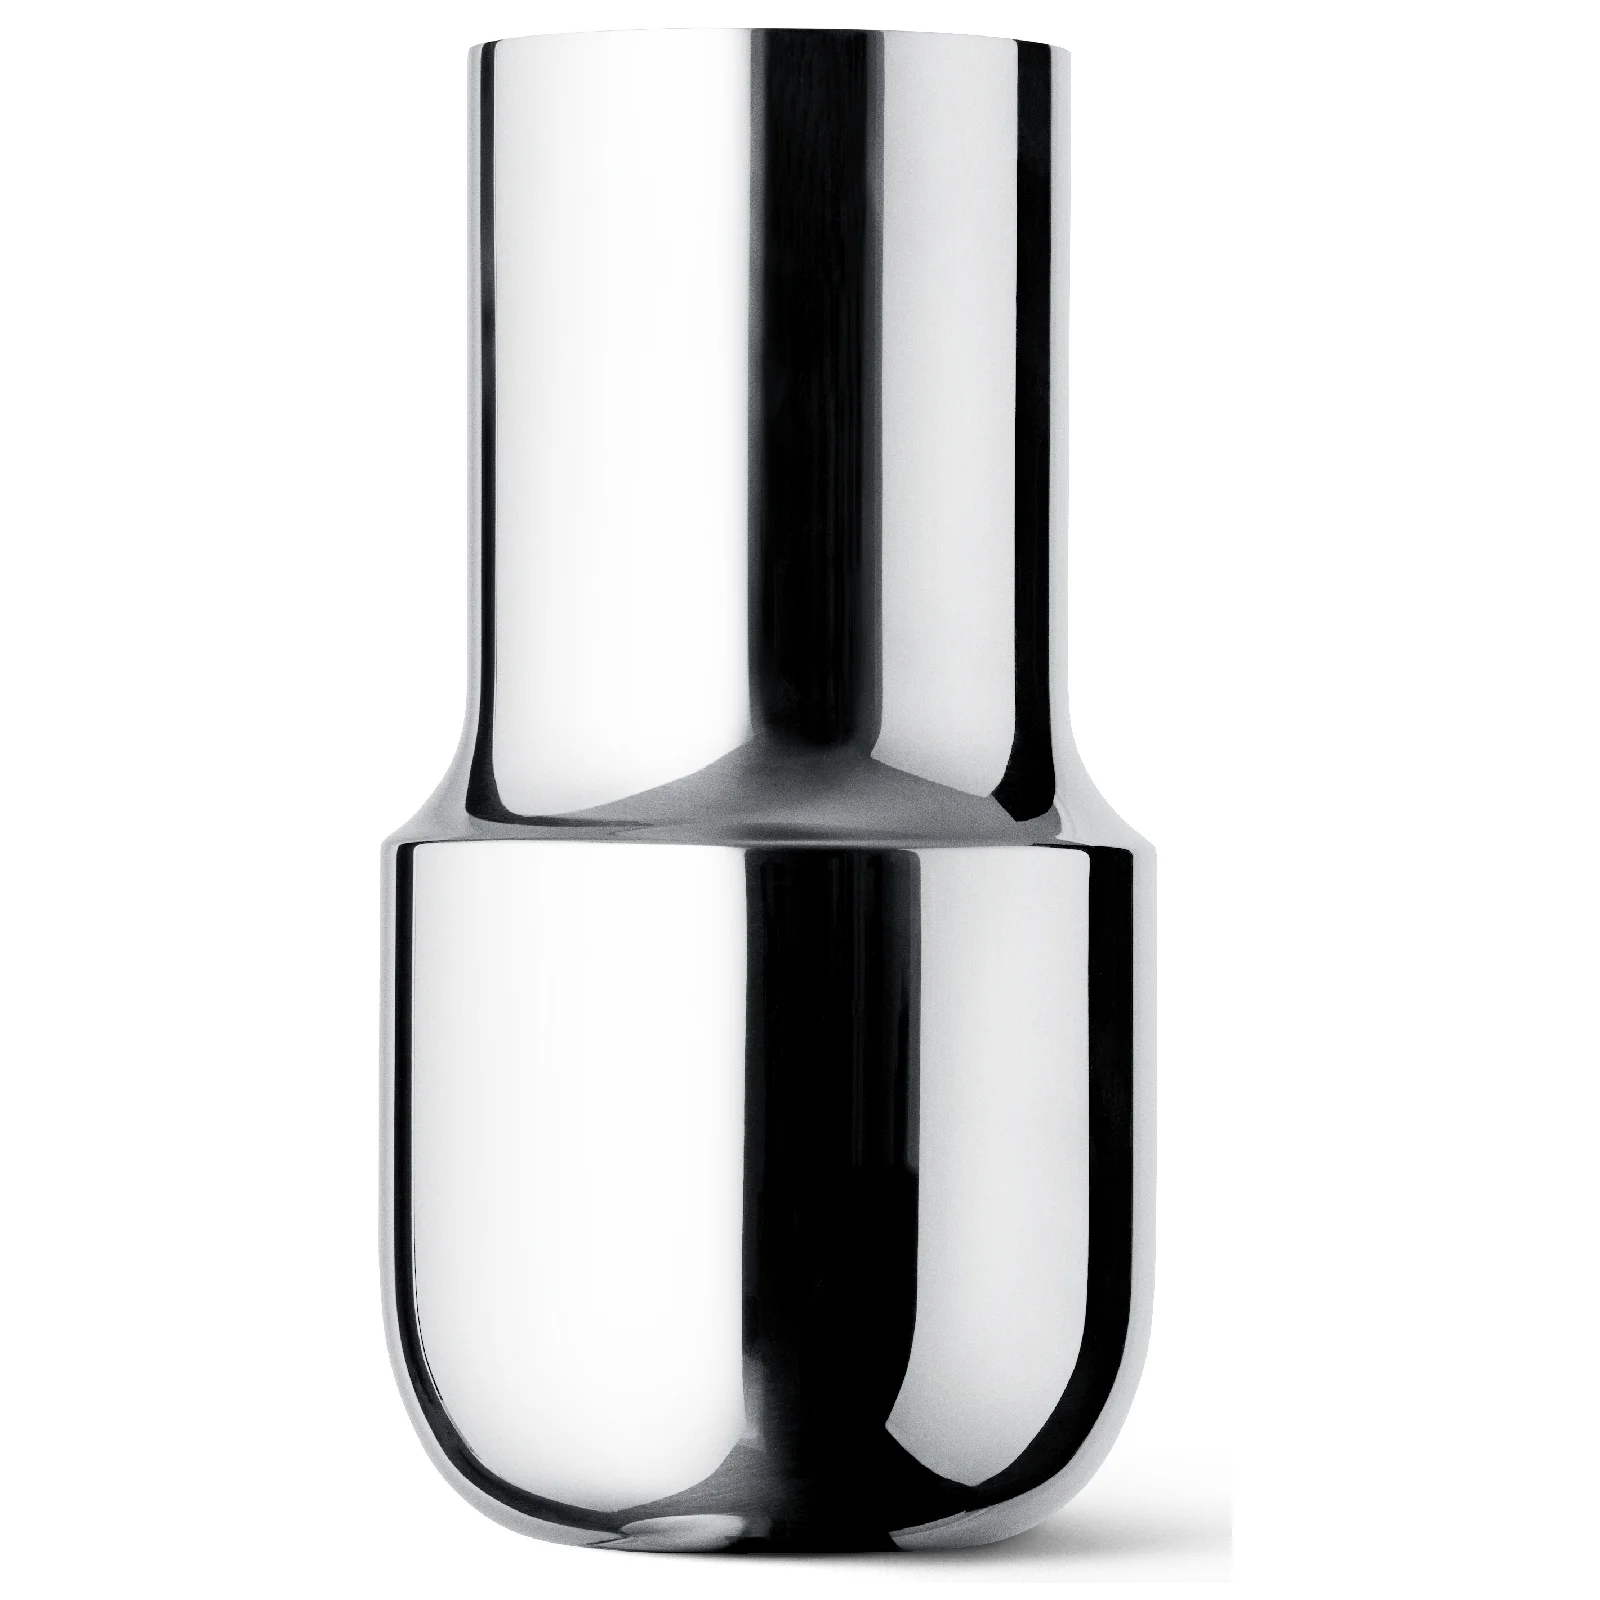 Menu Tactile Tall Vase - Stainless Steel Image 1